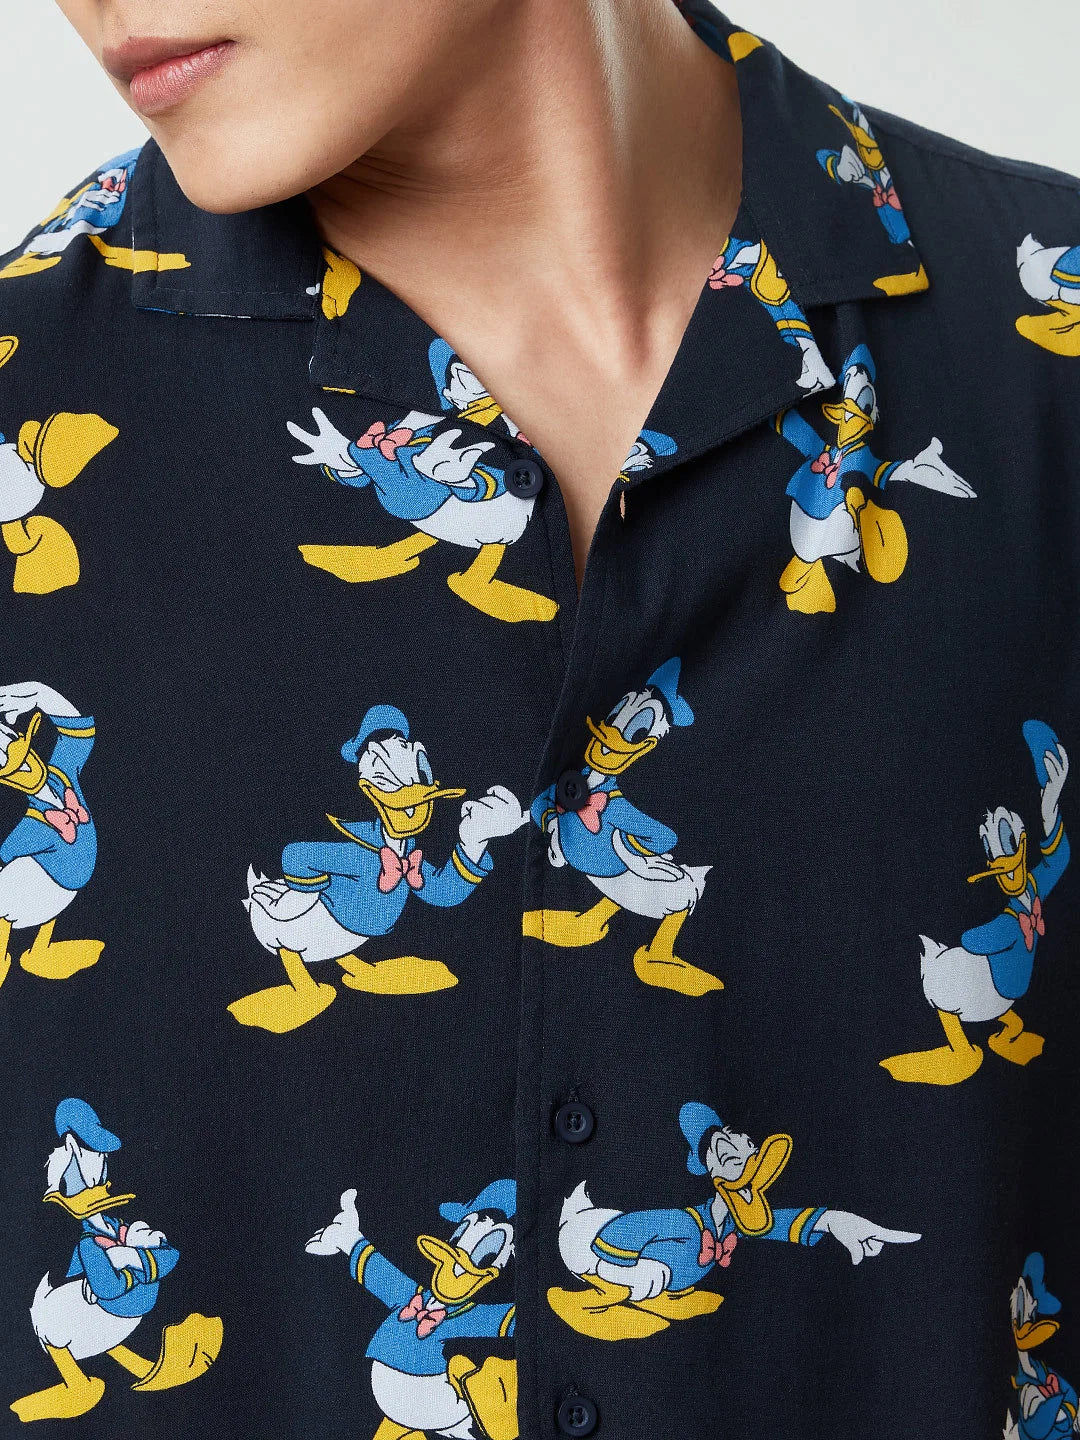 Donald Duck Pattern (UK version)